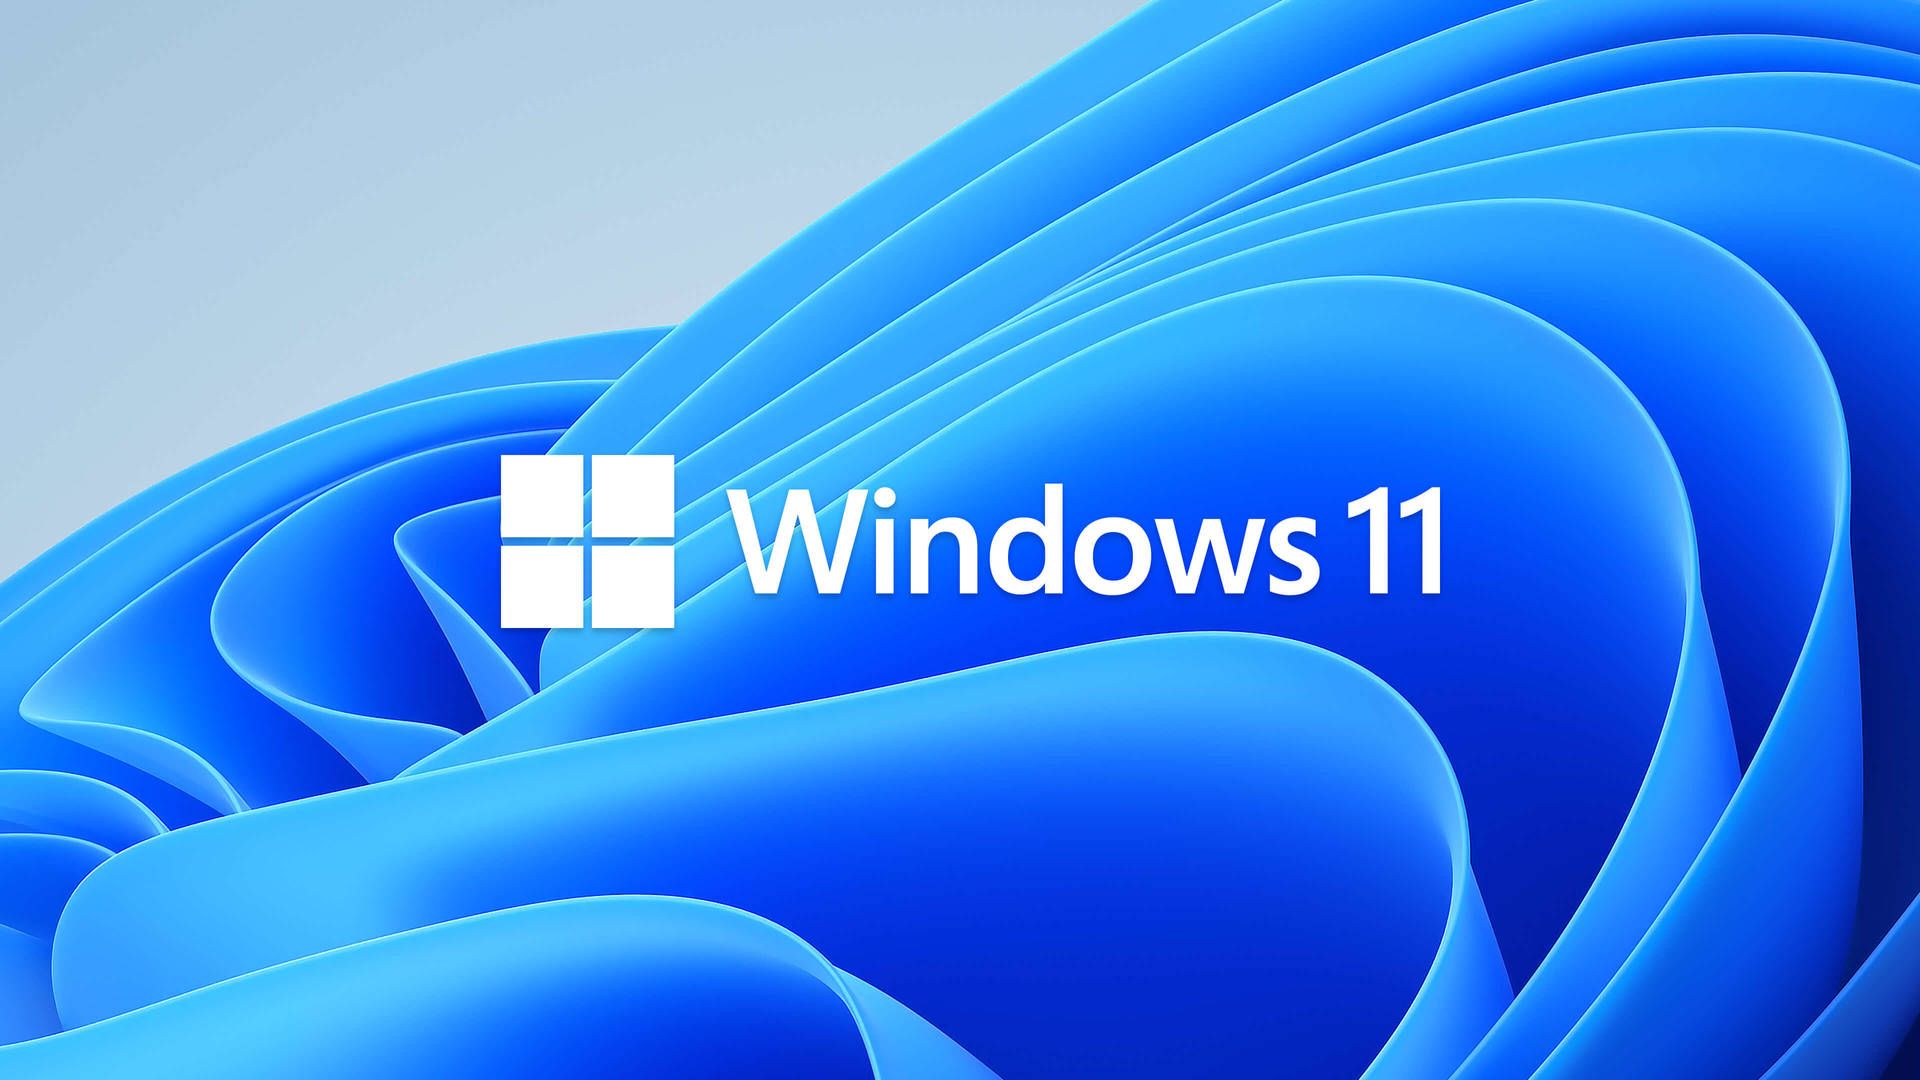  Windows 11 Hintergrundbild 1920x1080. Windows 11 Wallpaper